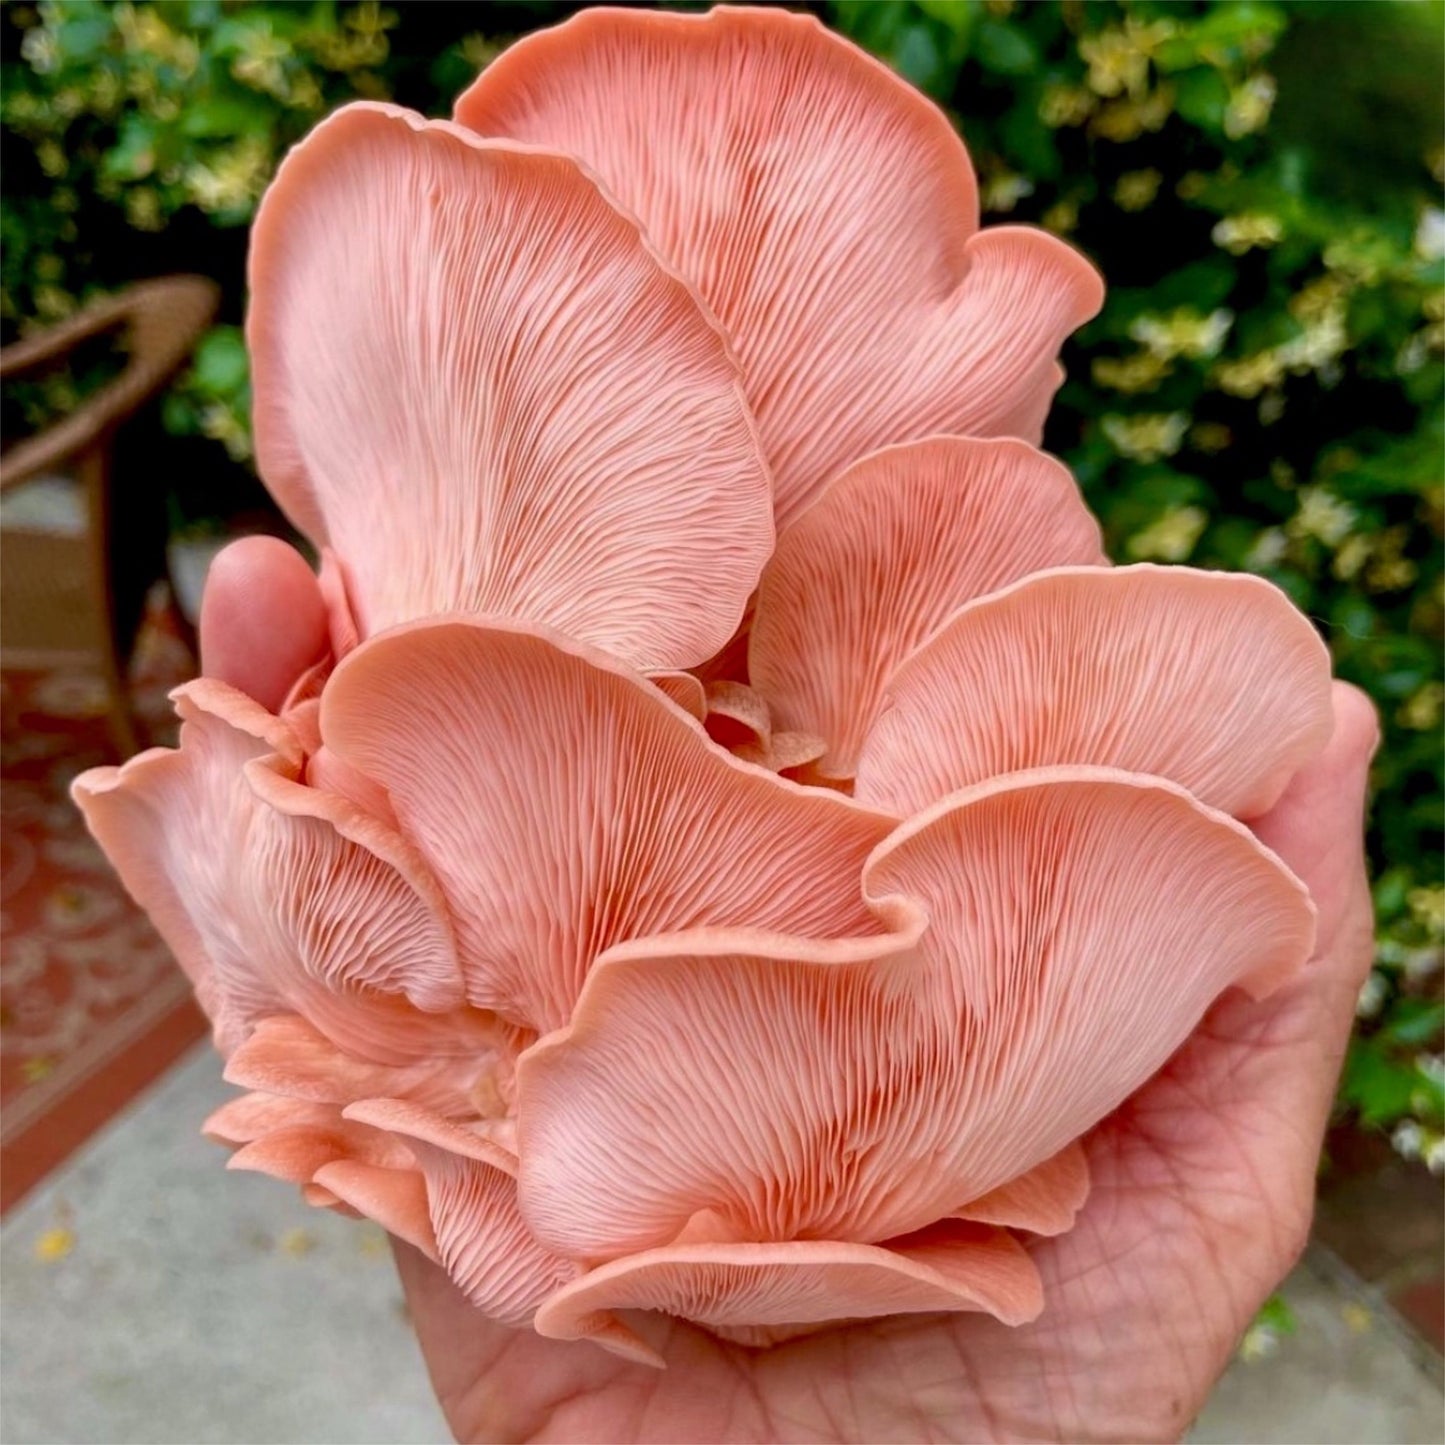 Organic Pink Oyster ‘Spray & Grow’ Mushroom Growing Kit by North Spore